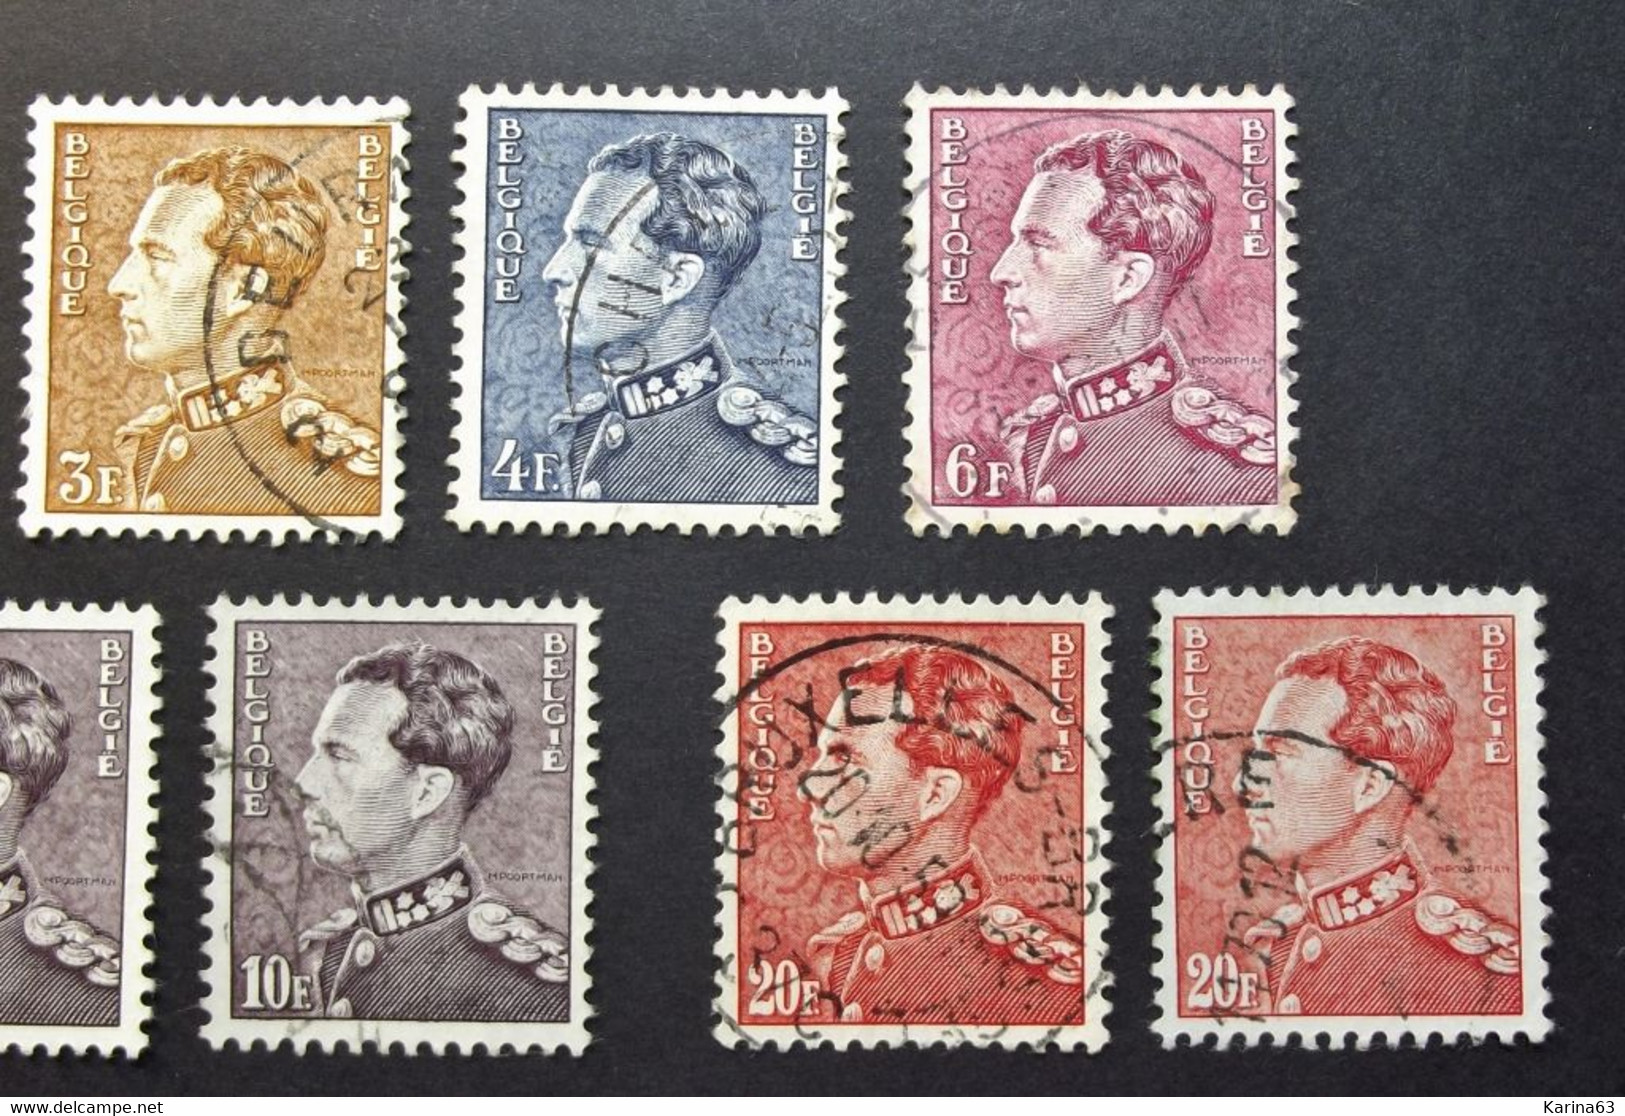 Belgie Belgique - 1951 - OPB/COB  N°  847a/847A/848/848A/848aA/848B/848B ( 7 Values) Poortman  - Obl. - Used Stamps